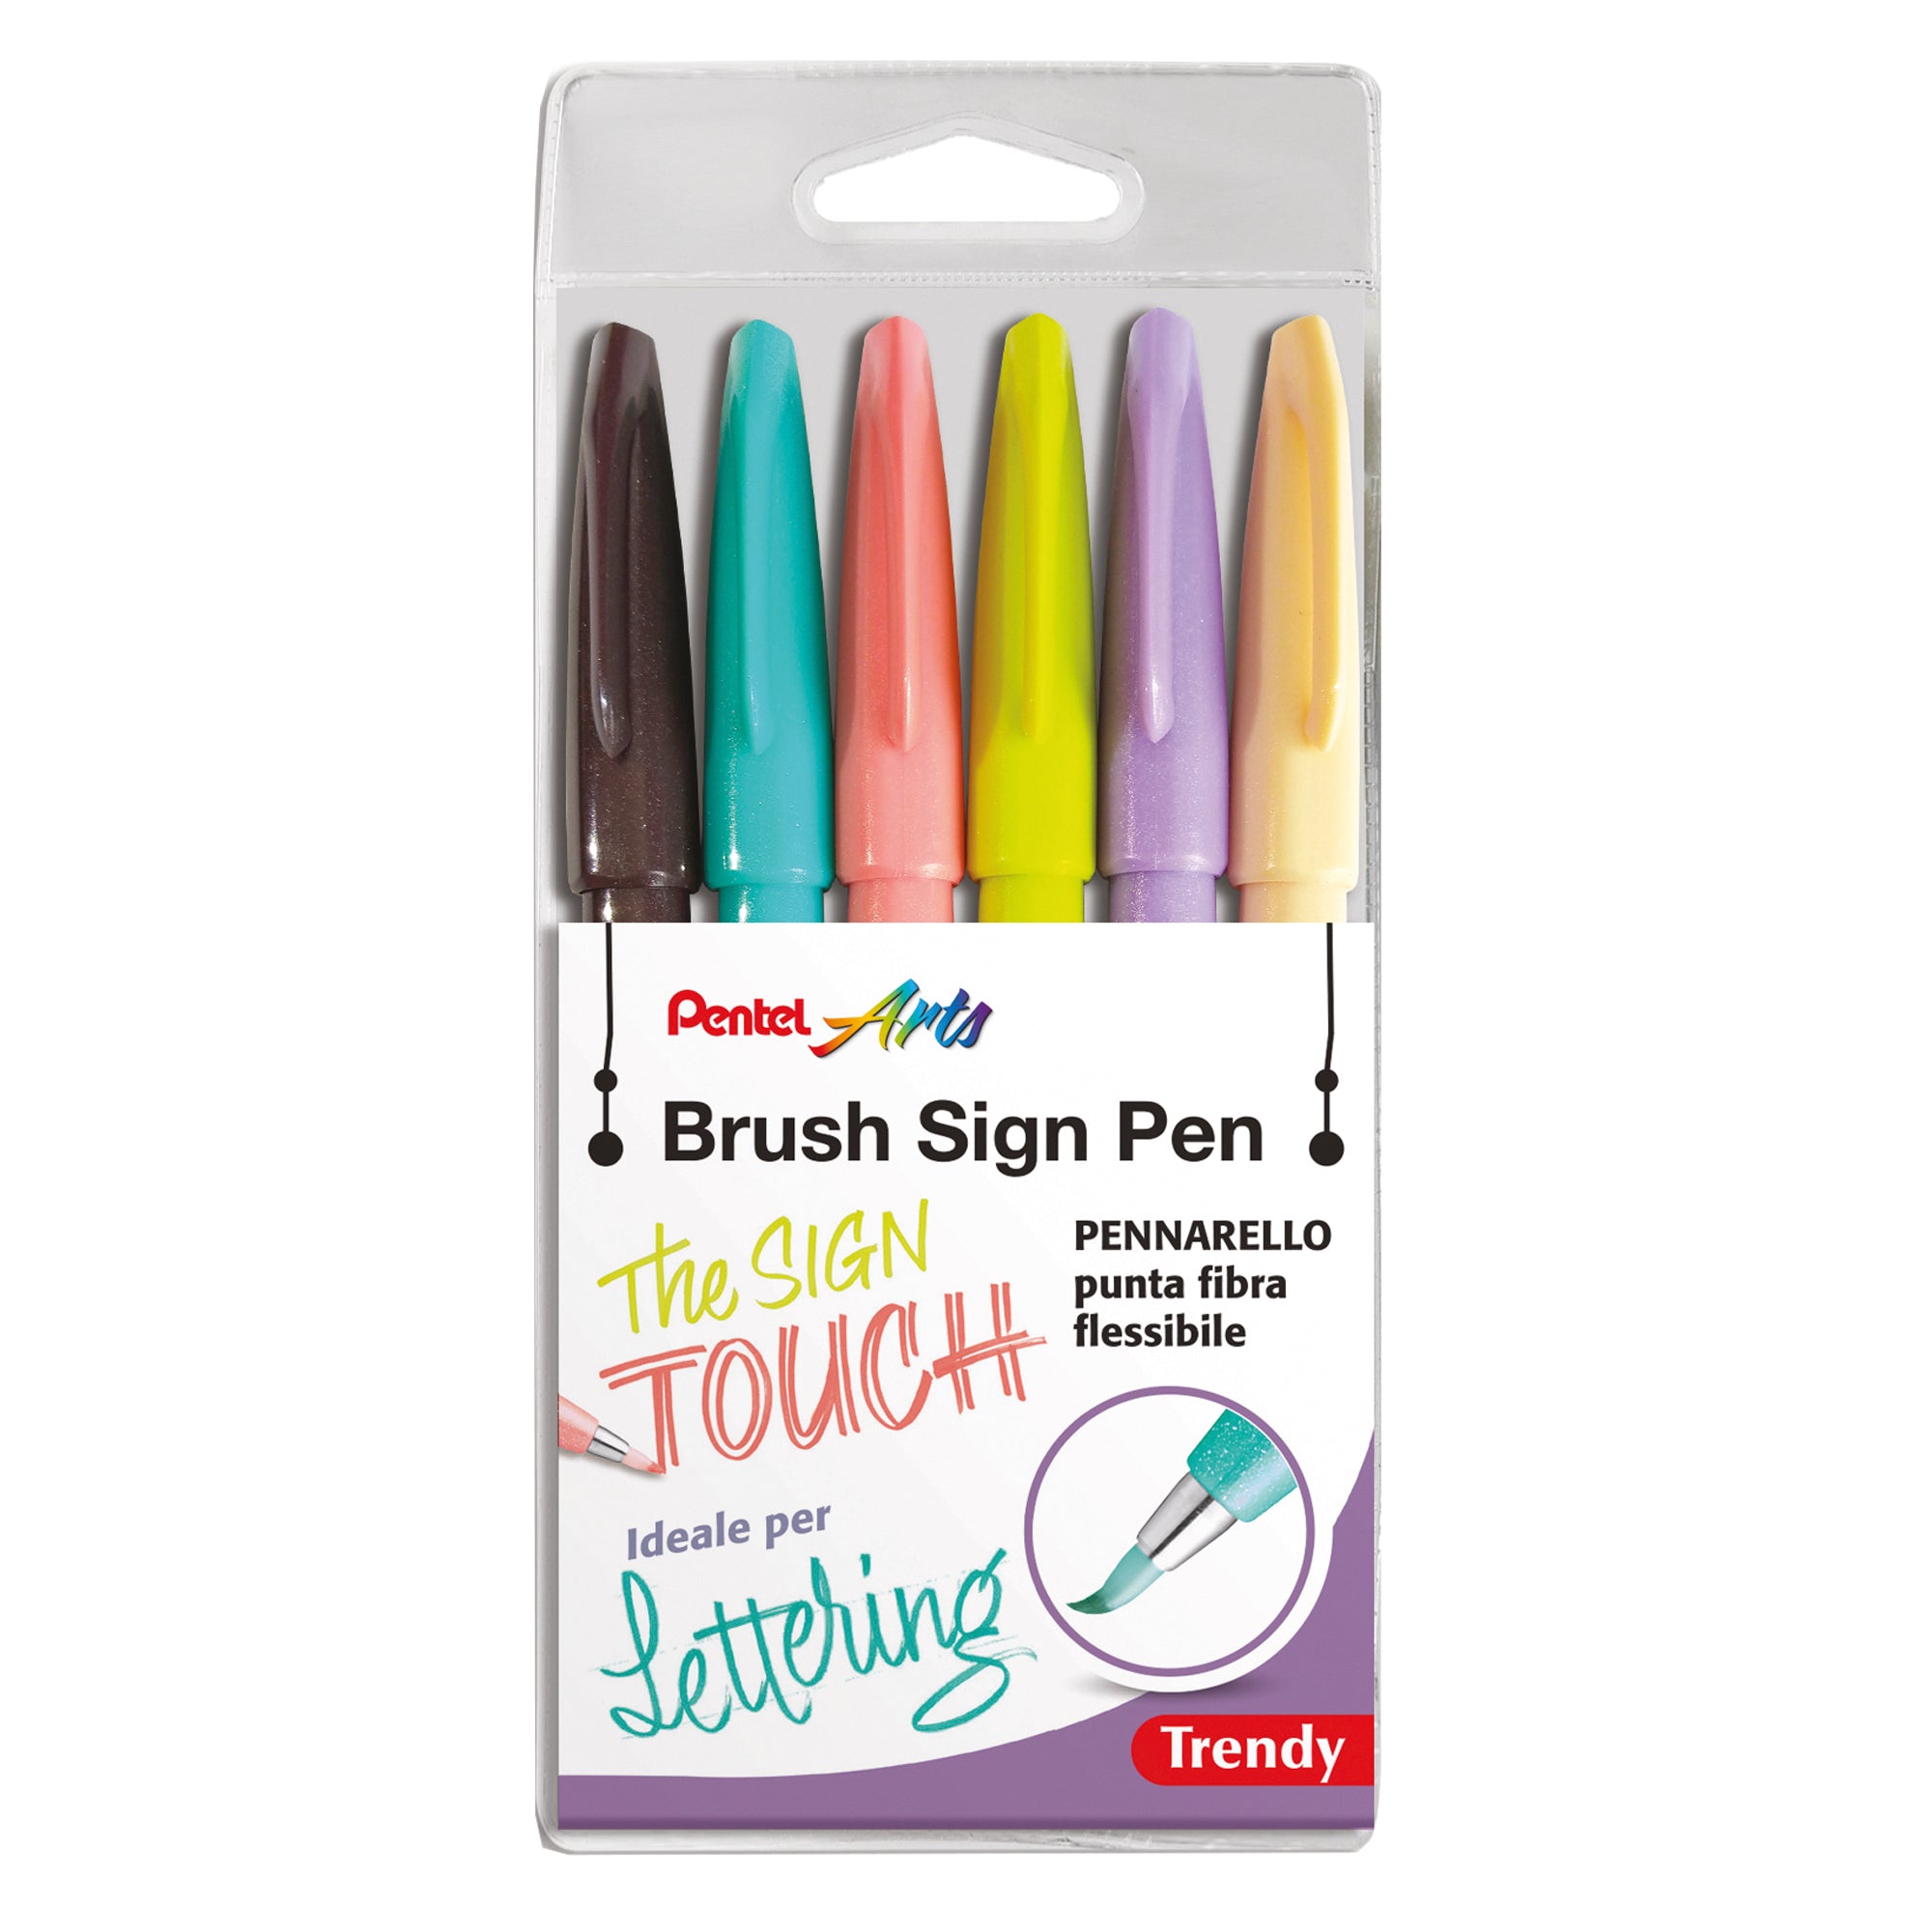 pentel-astuccio-6-sign-pen-brush-trendy-colori-assortiti